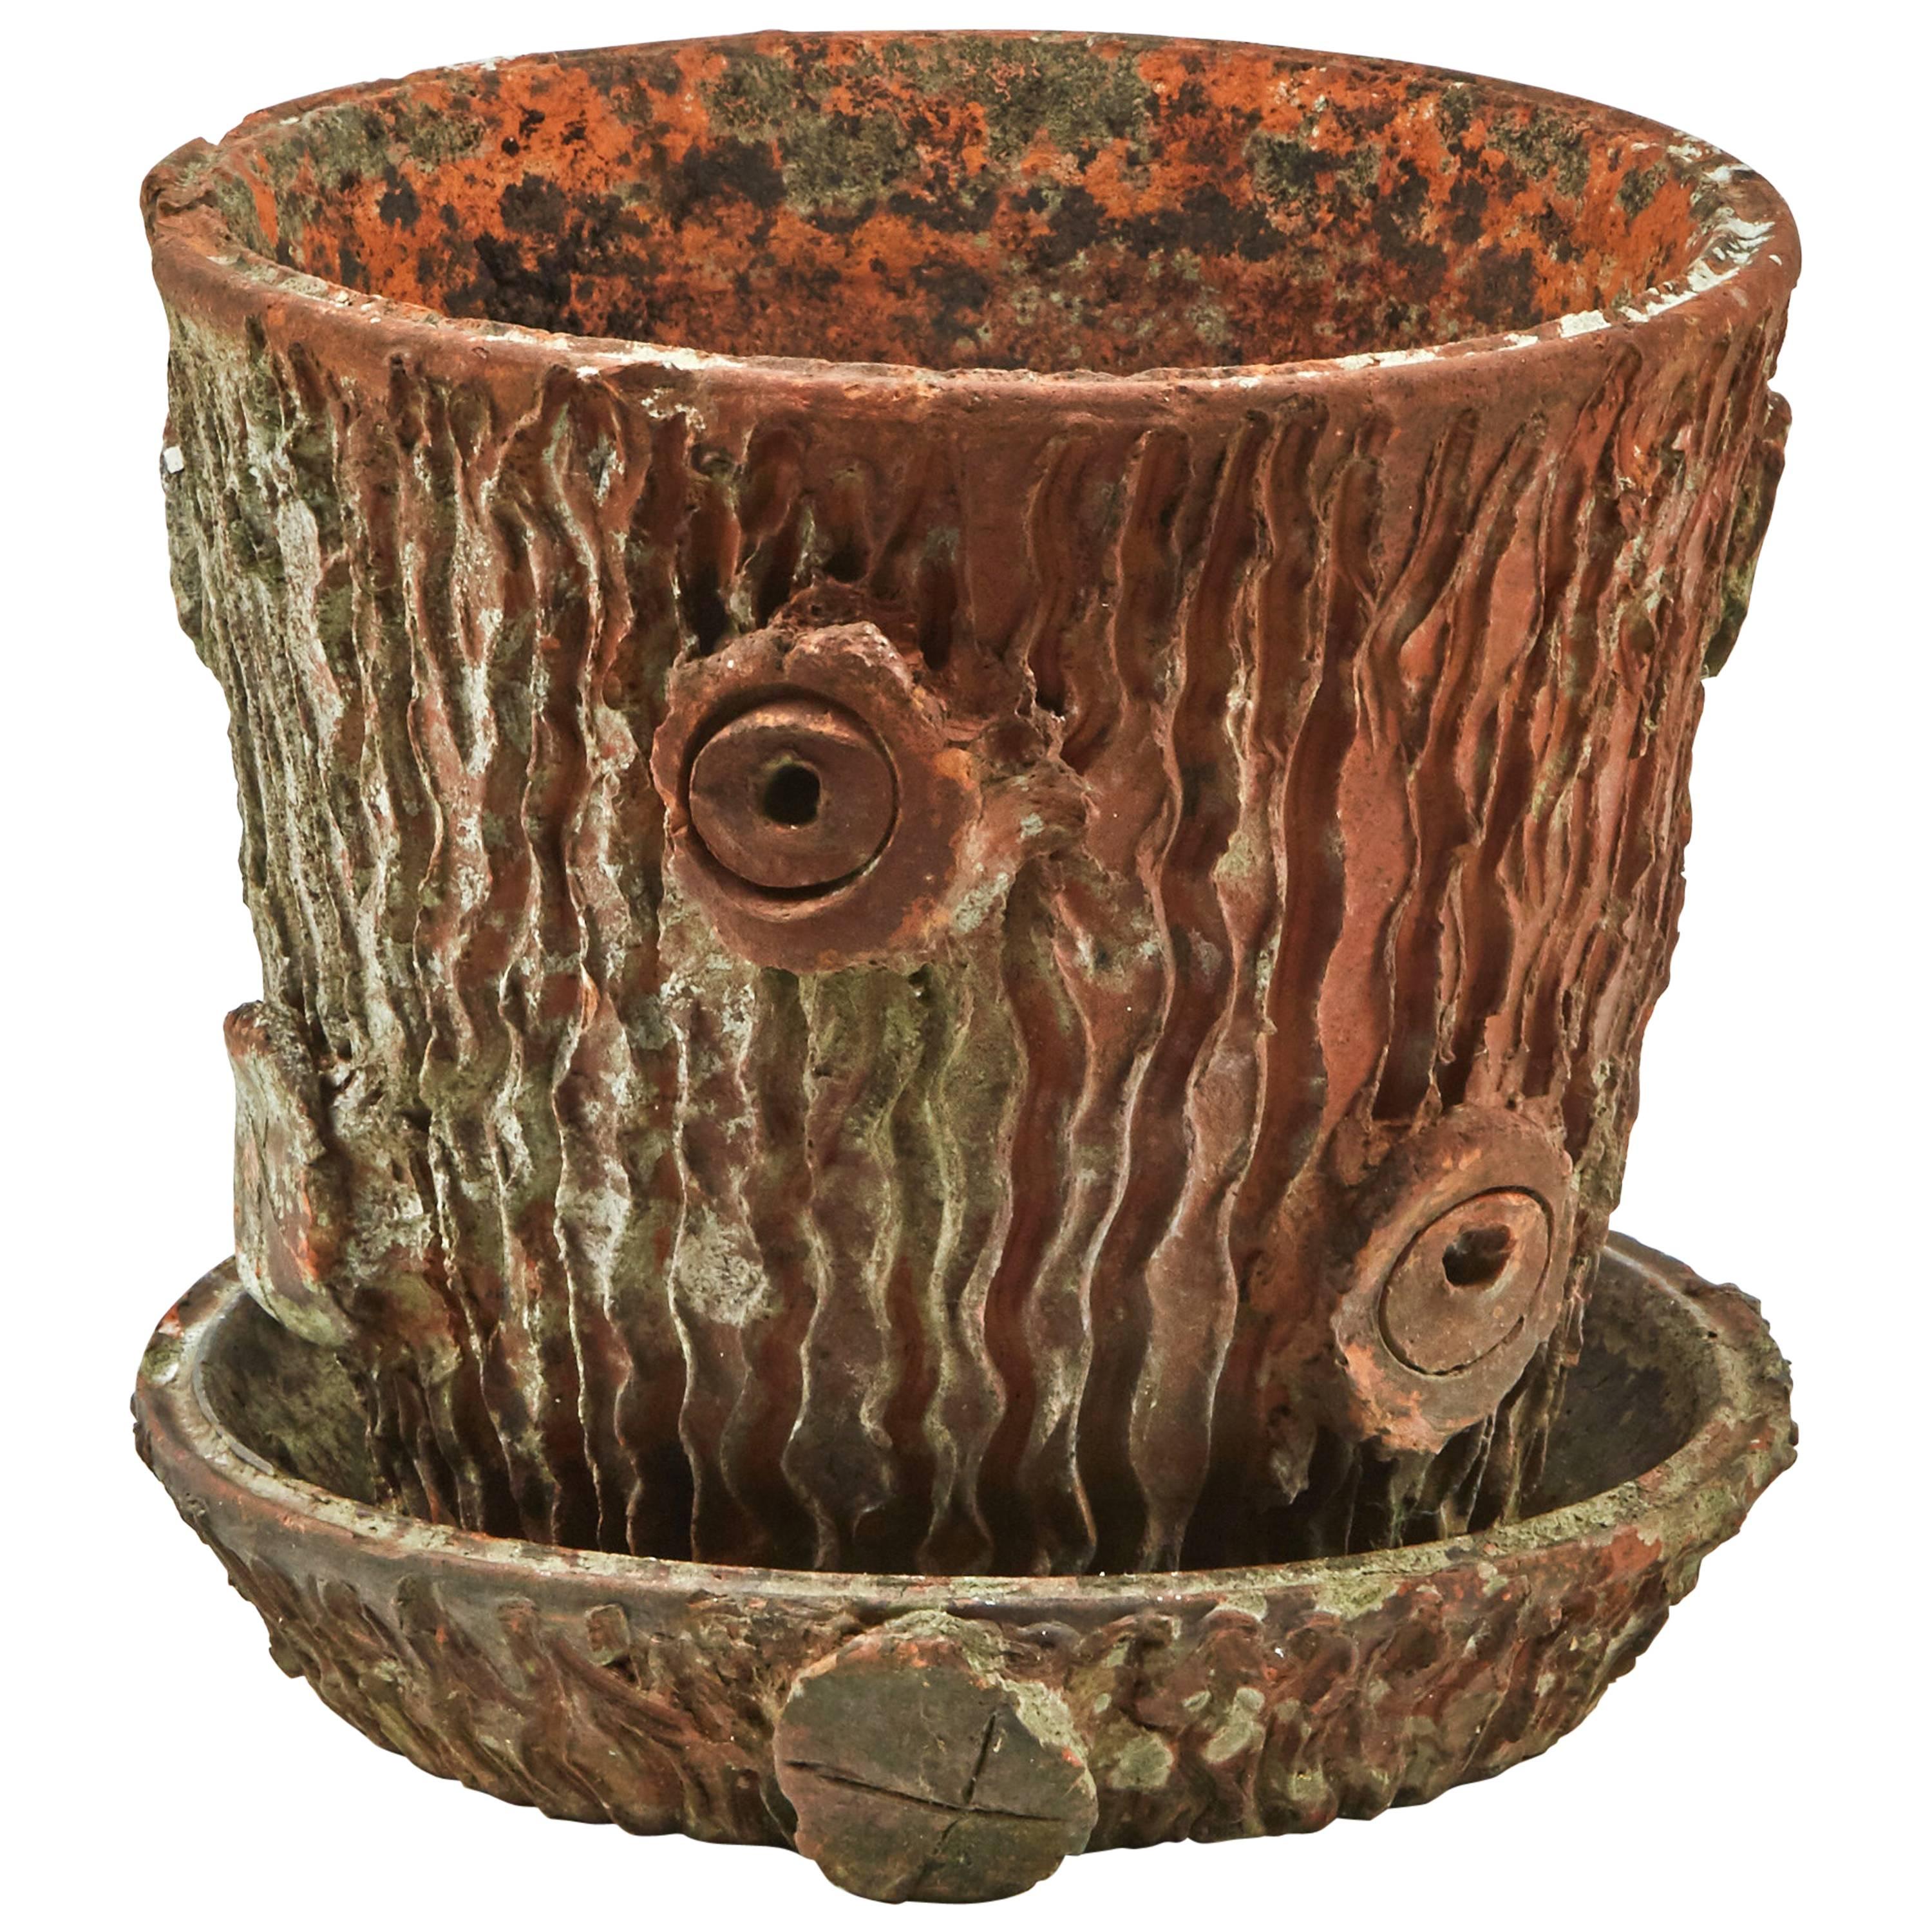 A Terra Cotta Pot in the Shape of a Tree Trunk 